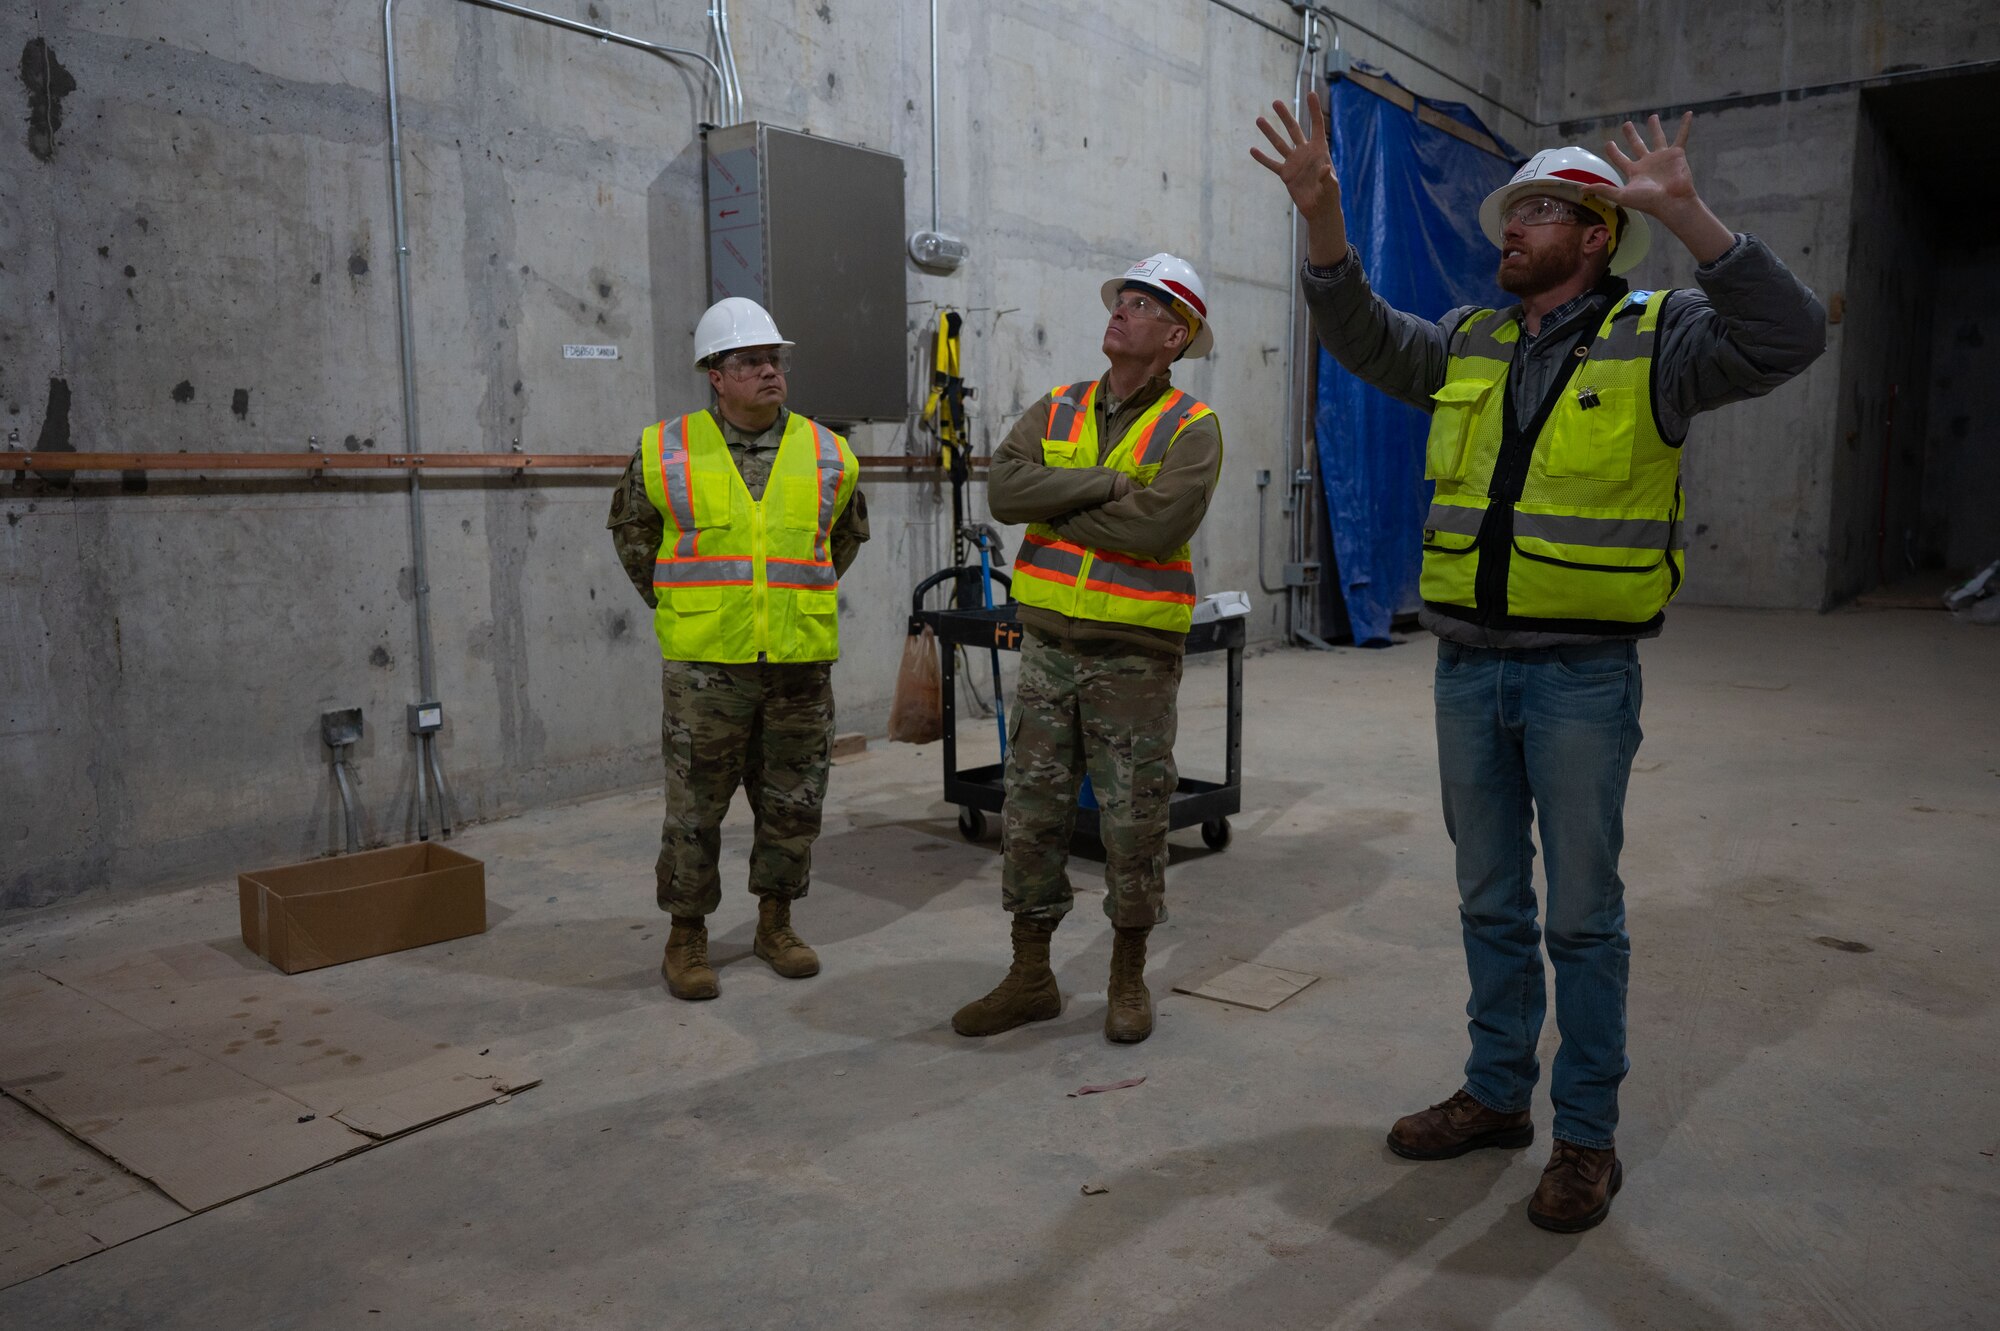 Maj. Gen. Lutton tours the weapons generation facility.